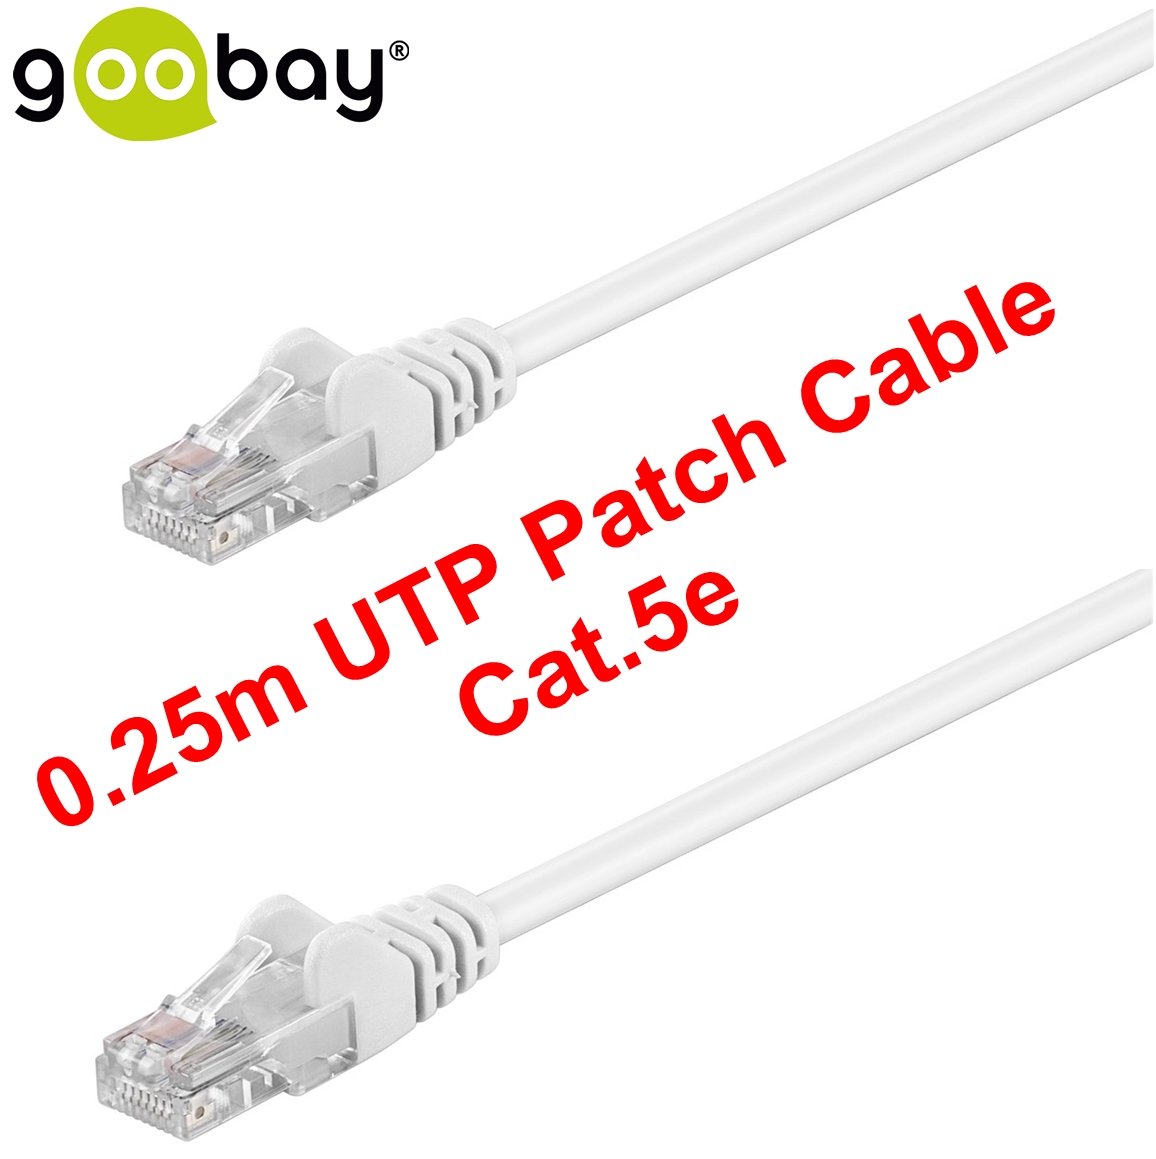 0.25m UTP Patch Cable Cat.5e GOOBAY (white)